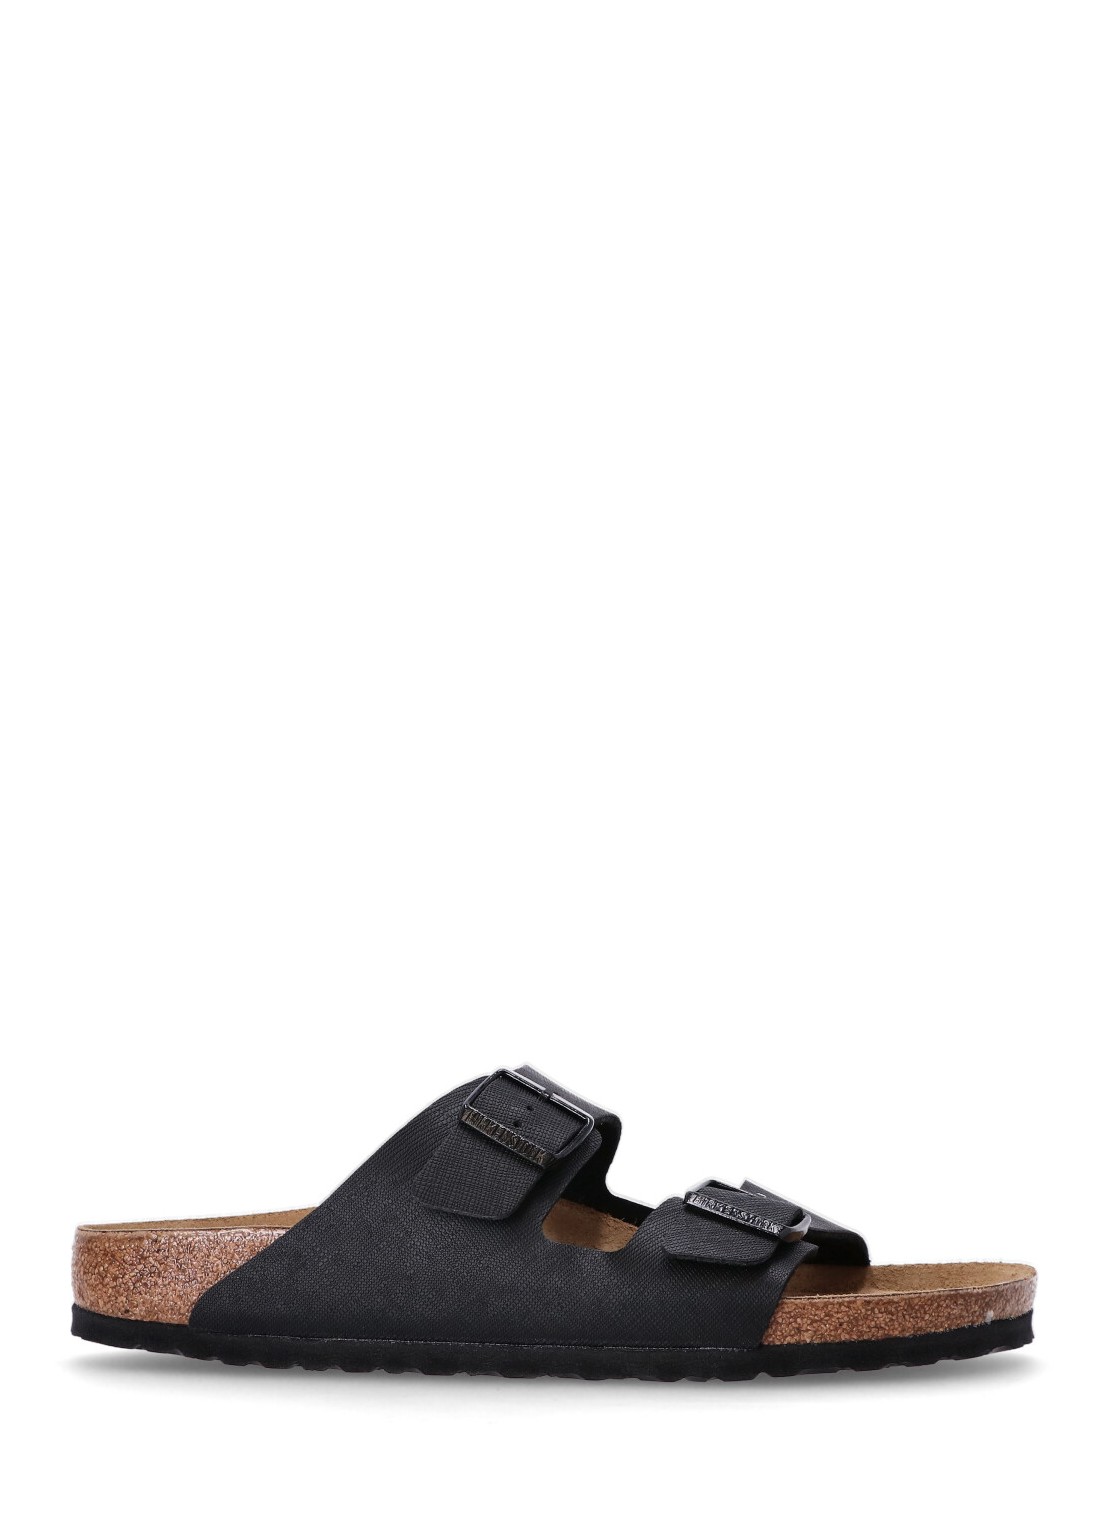 Sandalia birkenstock sandal man arizona bs 1026425 saffiano bf black talla 42
 